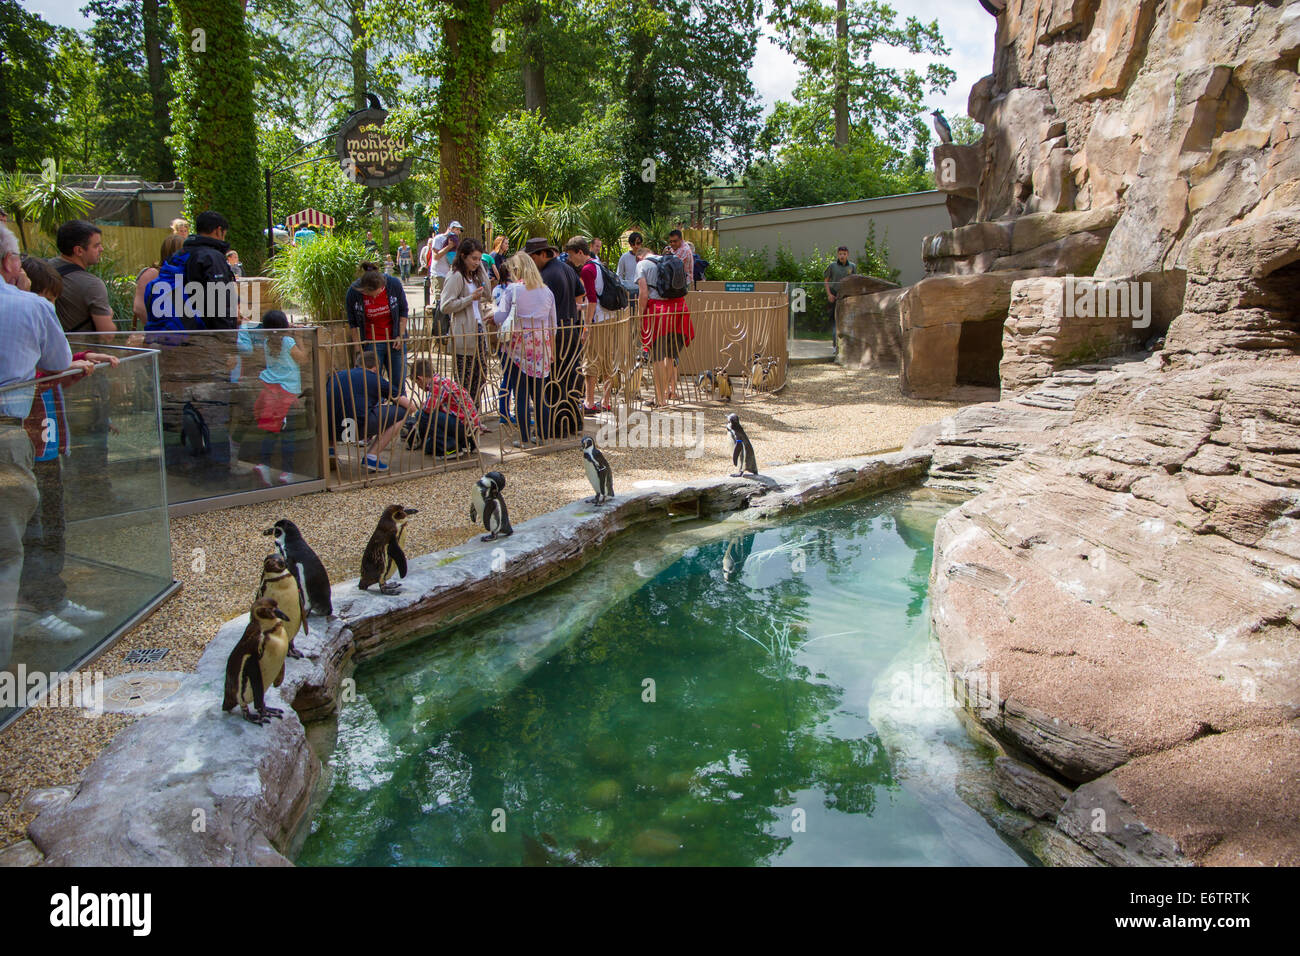 The Penguin enclosure at Longleat Safari Park Stock Photo - Alamy